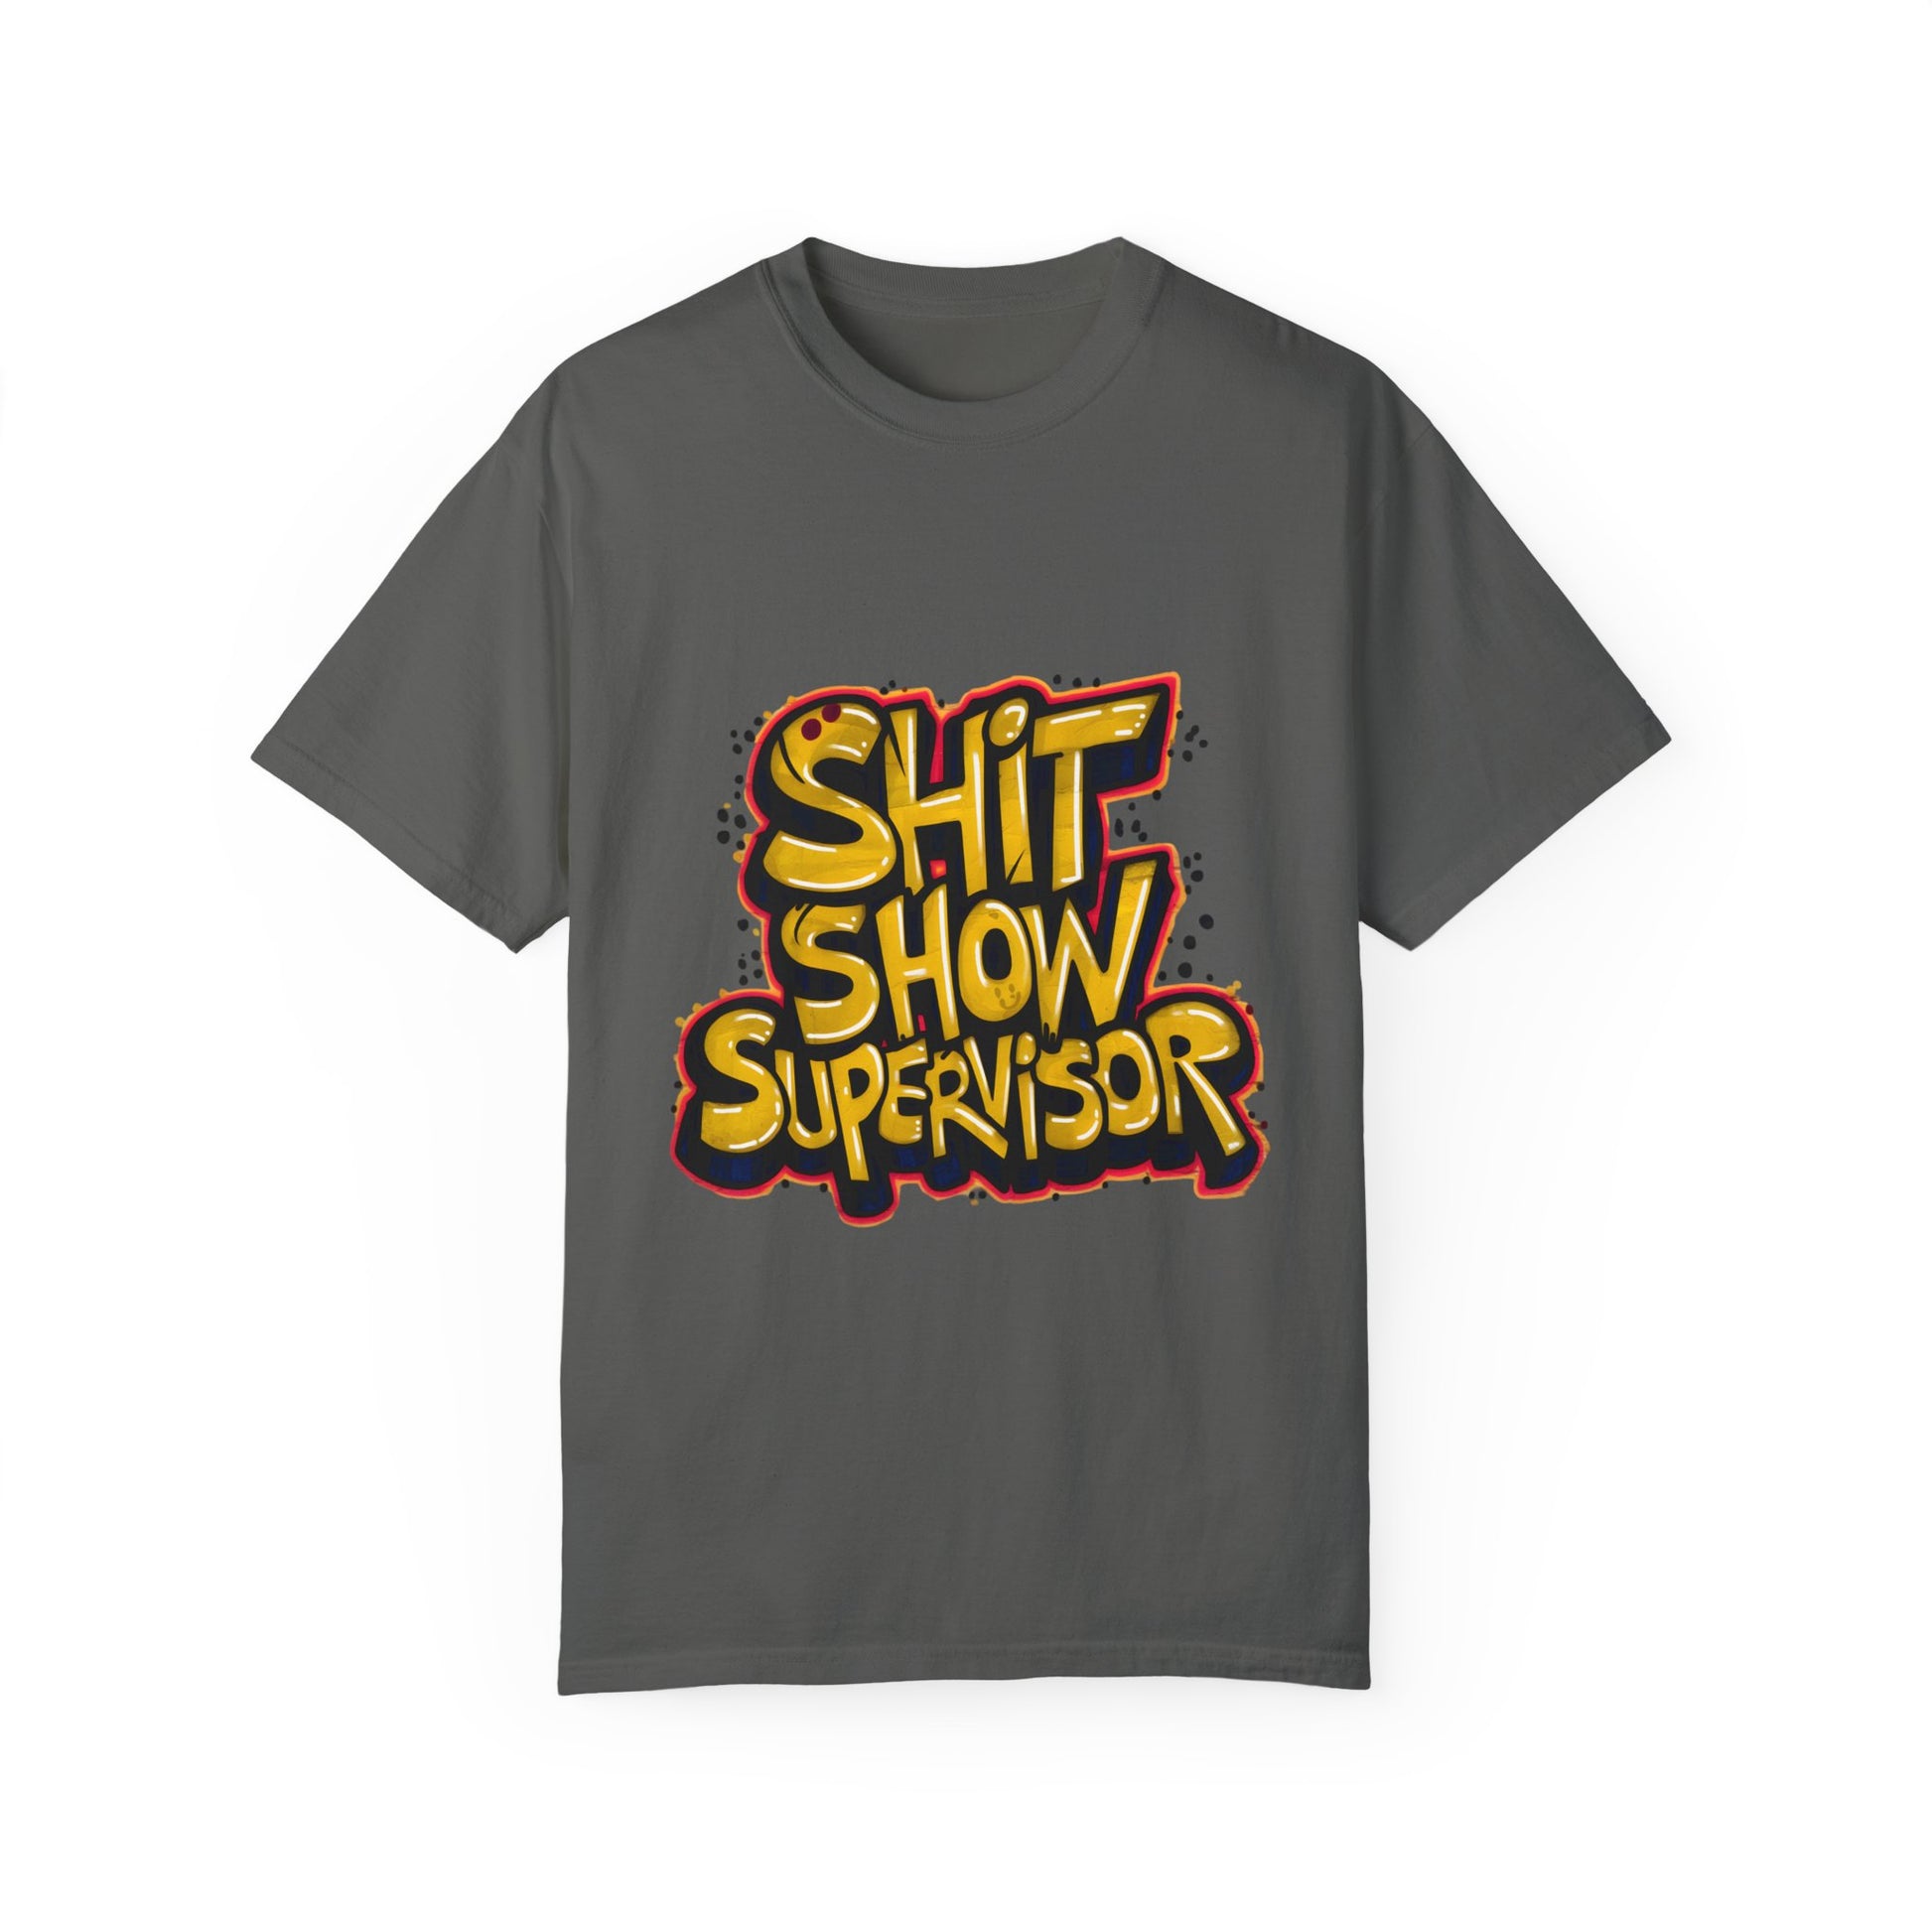 Shit Show Supervisor Urban Sarcastic Graphic Unisex Garment Dyed T-shirt Cotton Funny Humorous Graphic Soft Premium Unisex Men Women Pepper T-shirt Birthday Gift-12